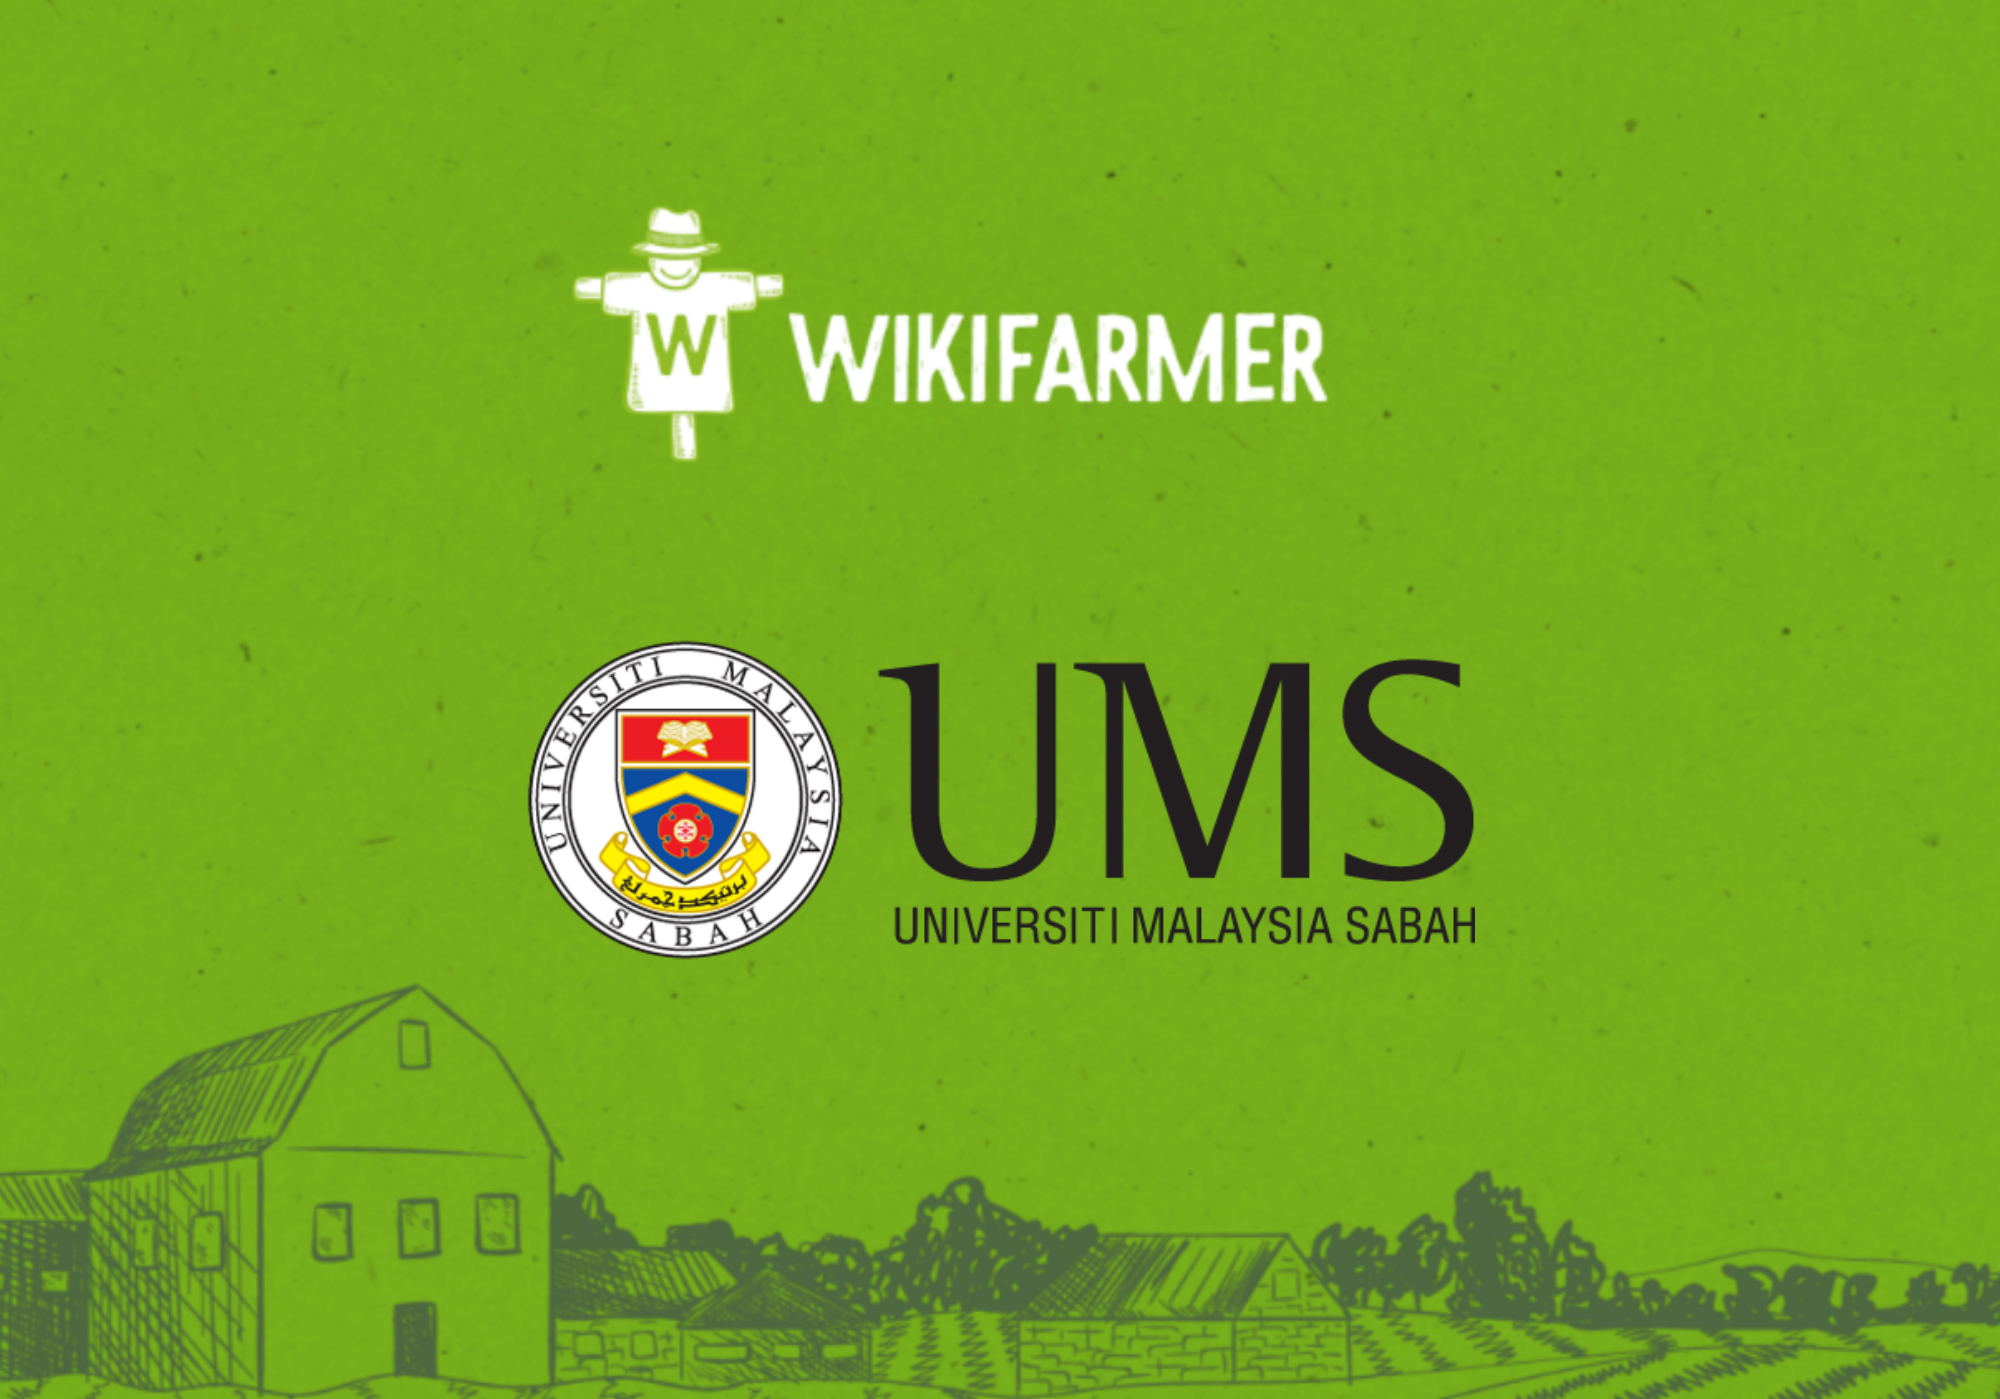 Partnership between Wikifarmer and Universiti Malaysia Sabah